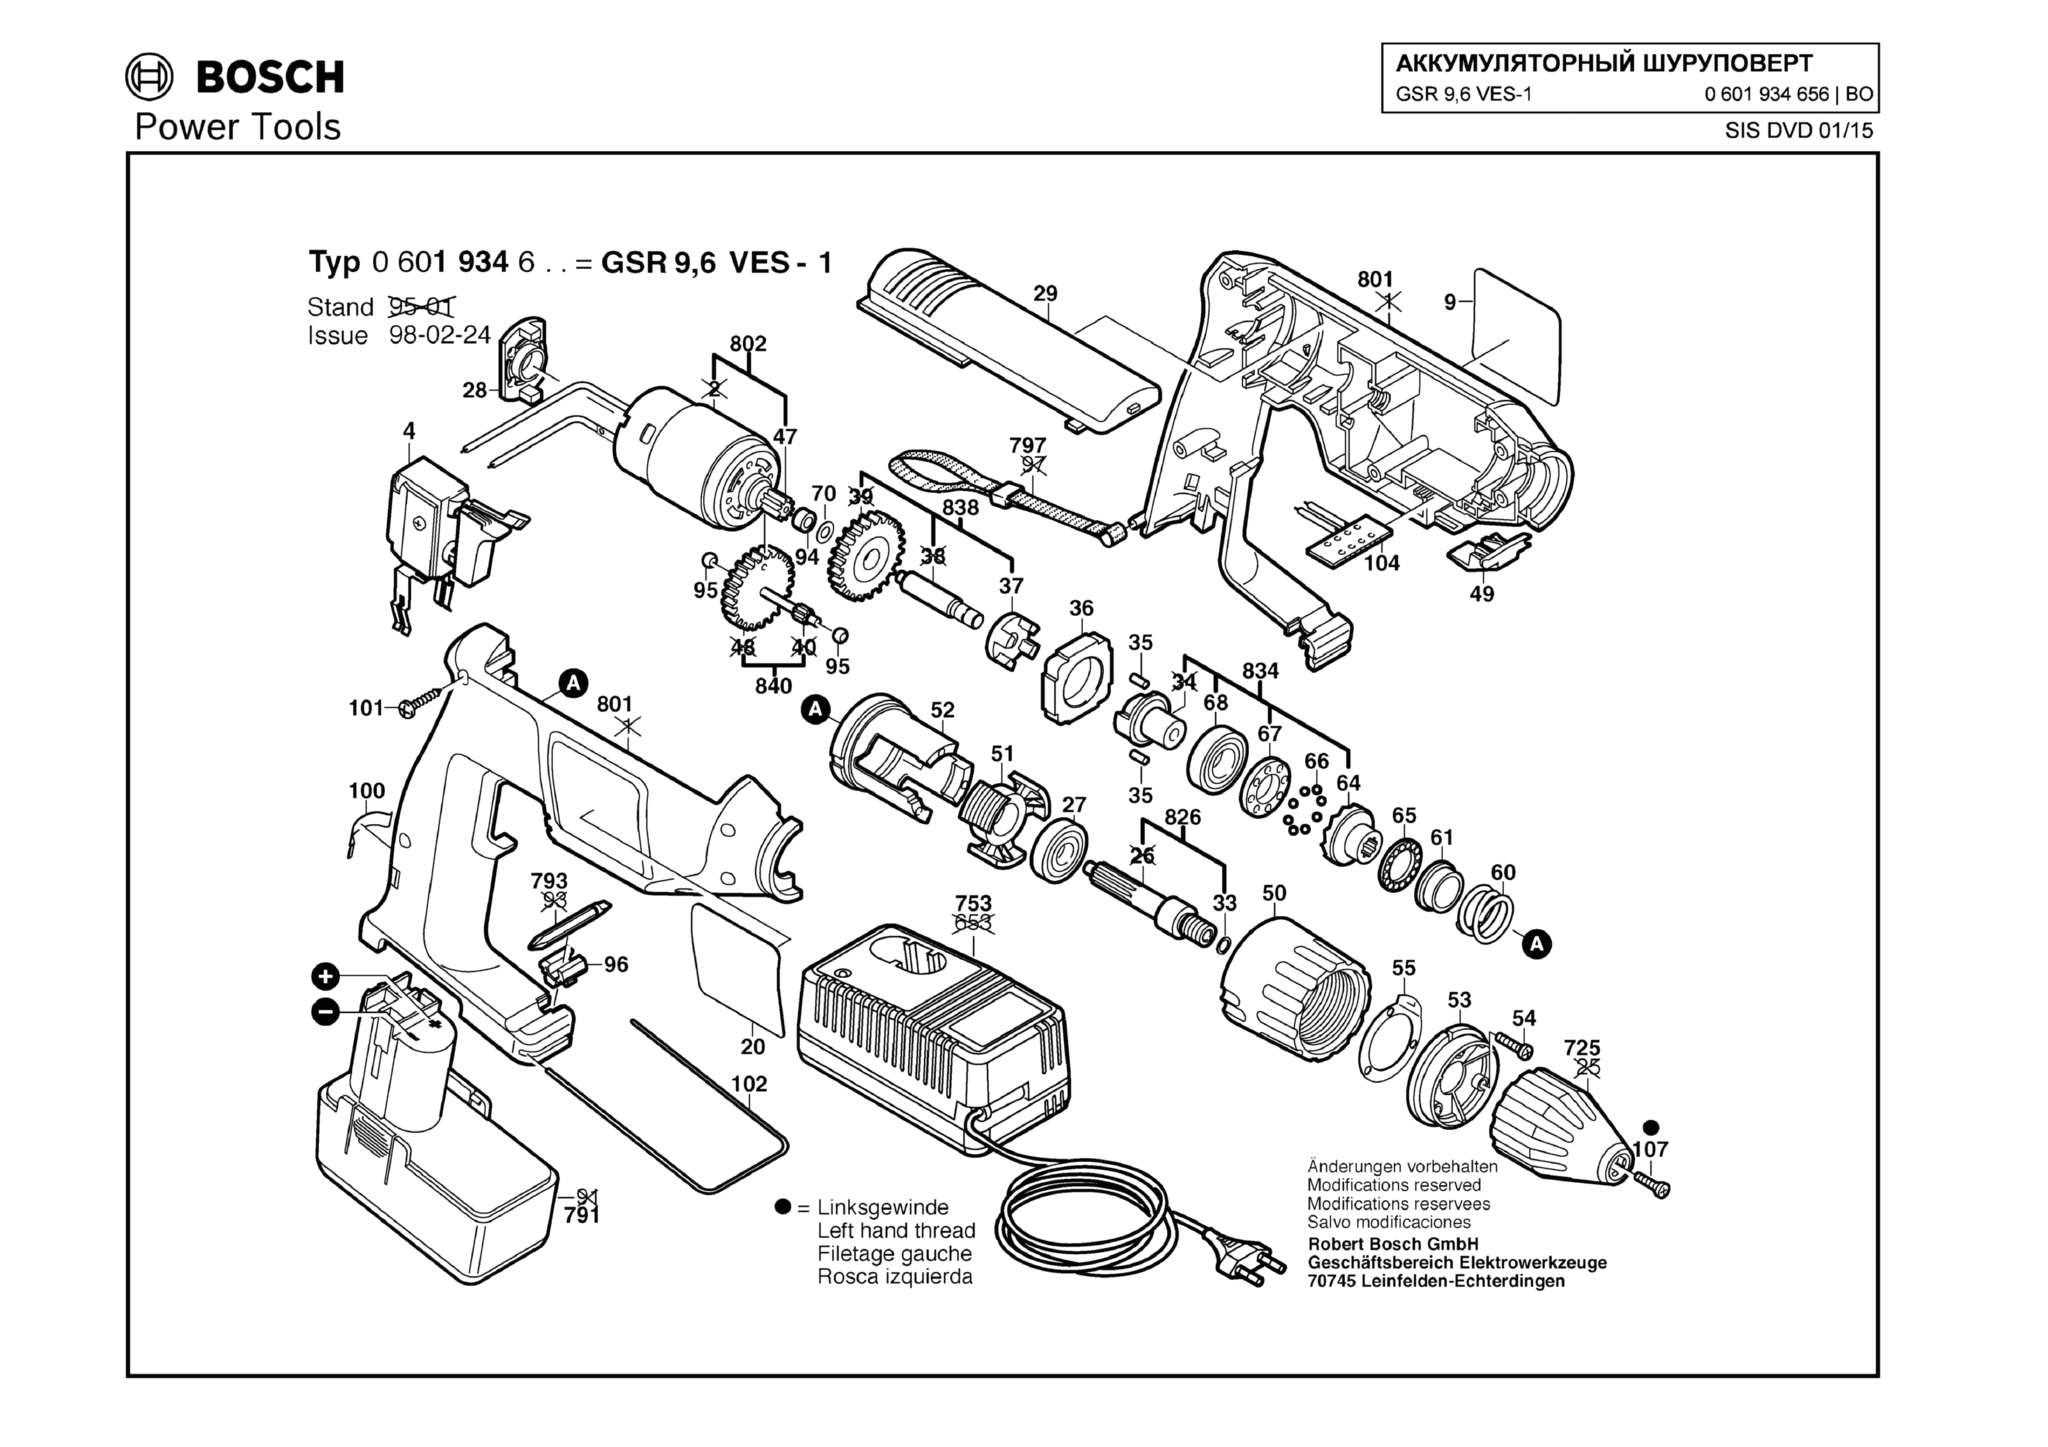 Запчасти, схема и деталировка Bosch GSR 9,6 VES-1 (ТИП 0601934656)